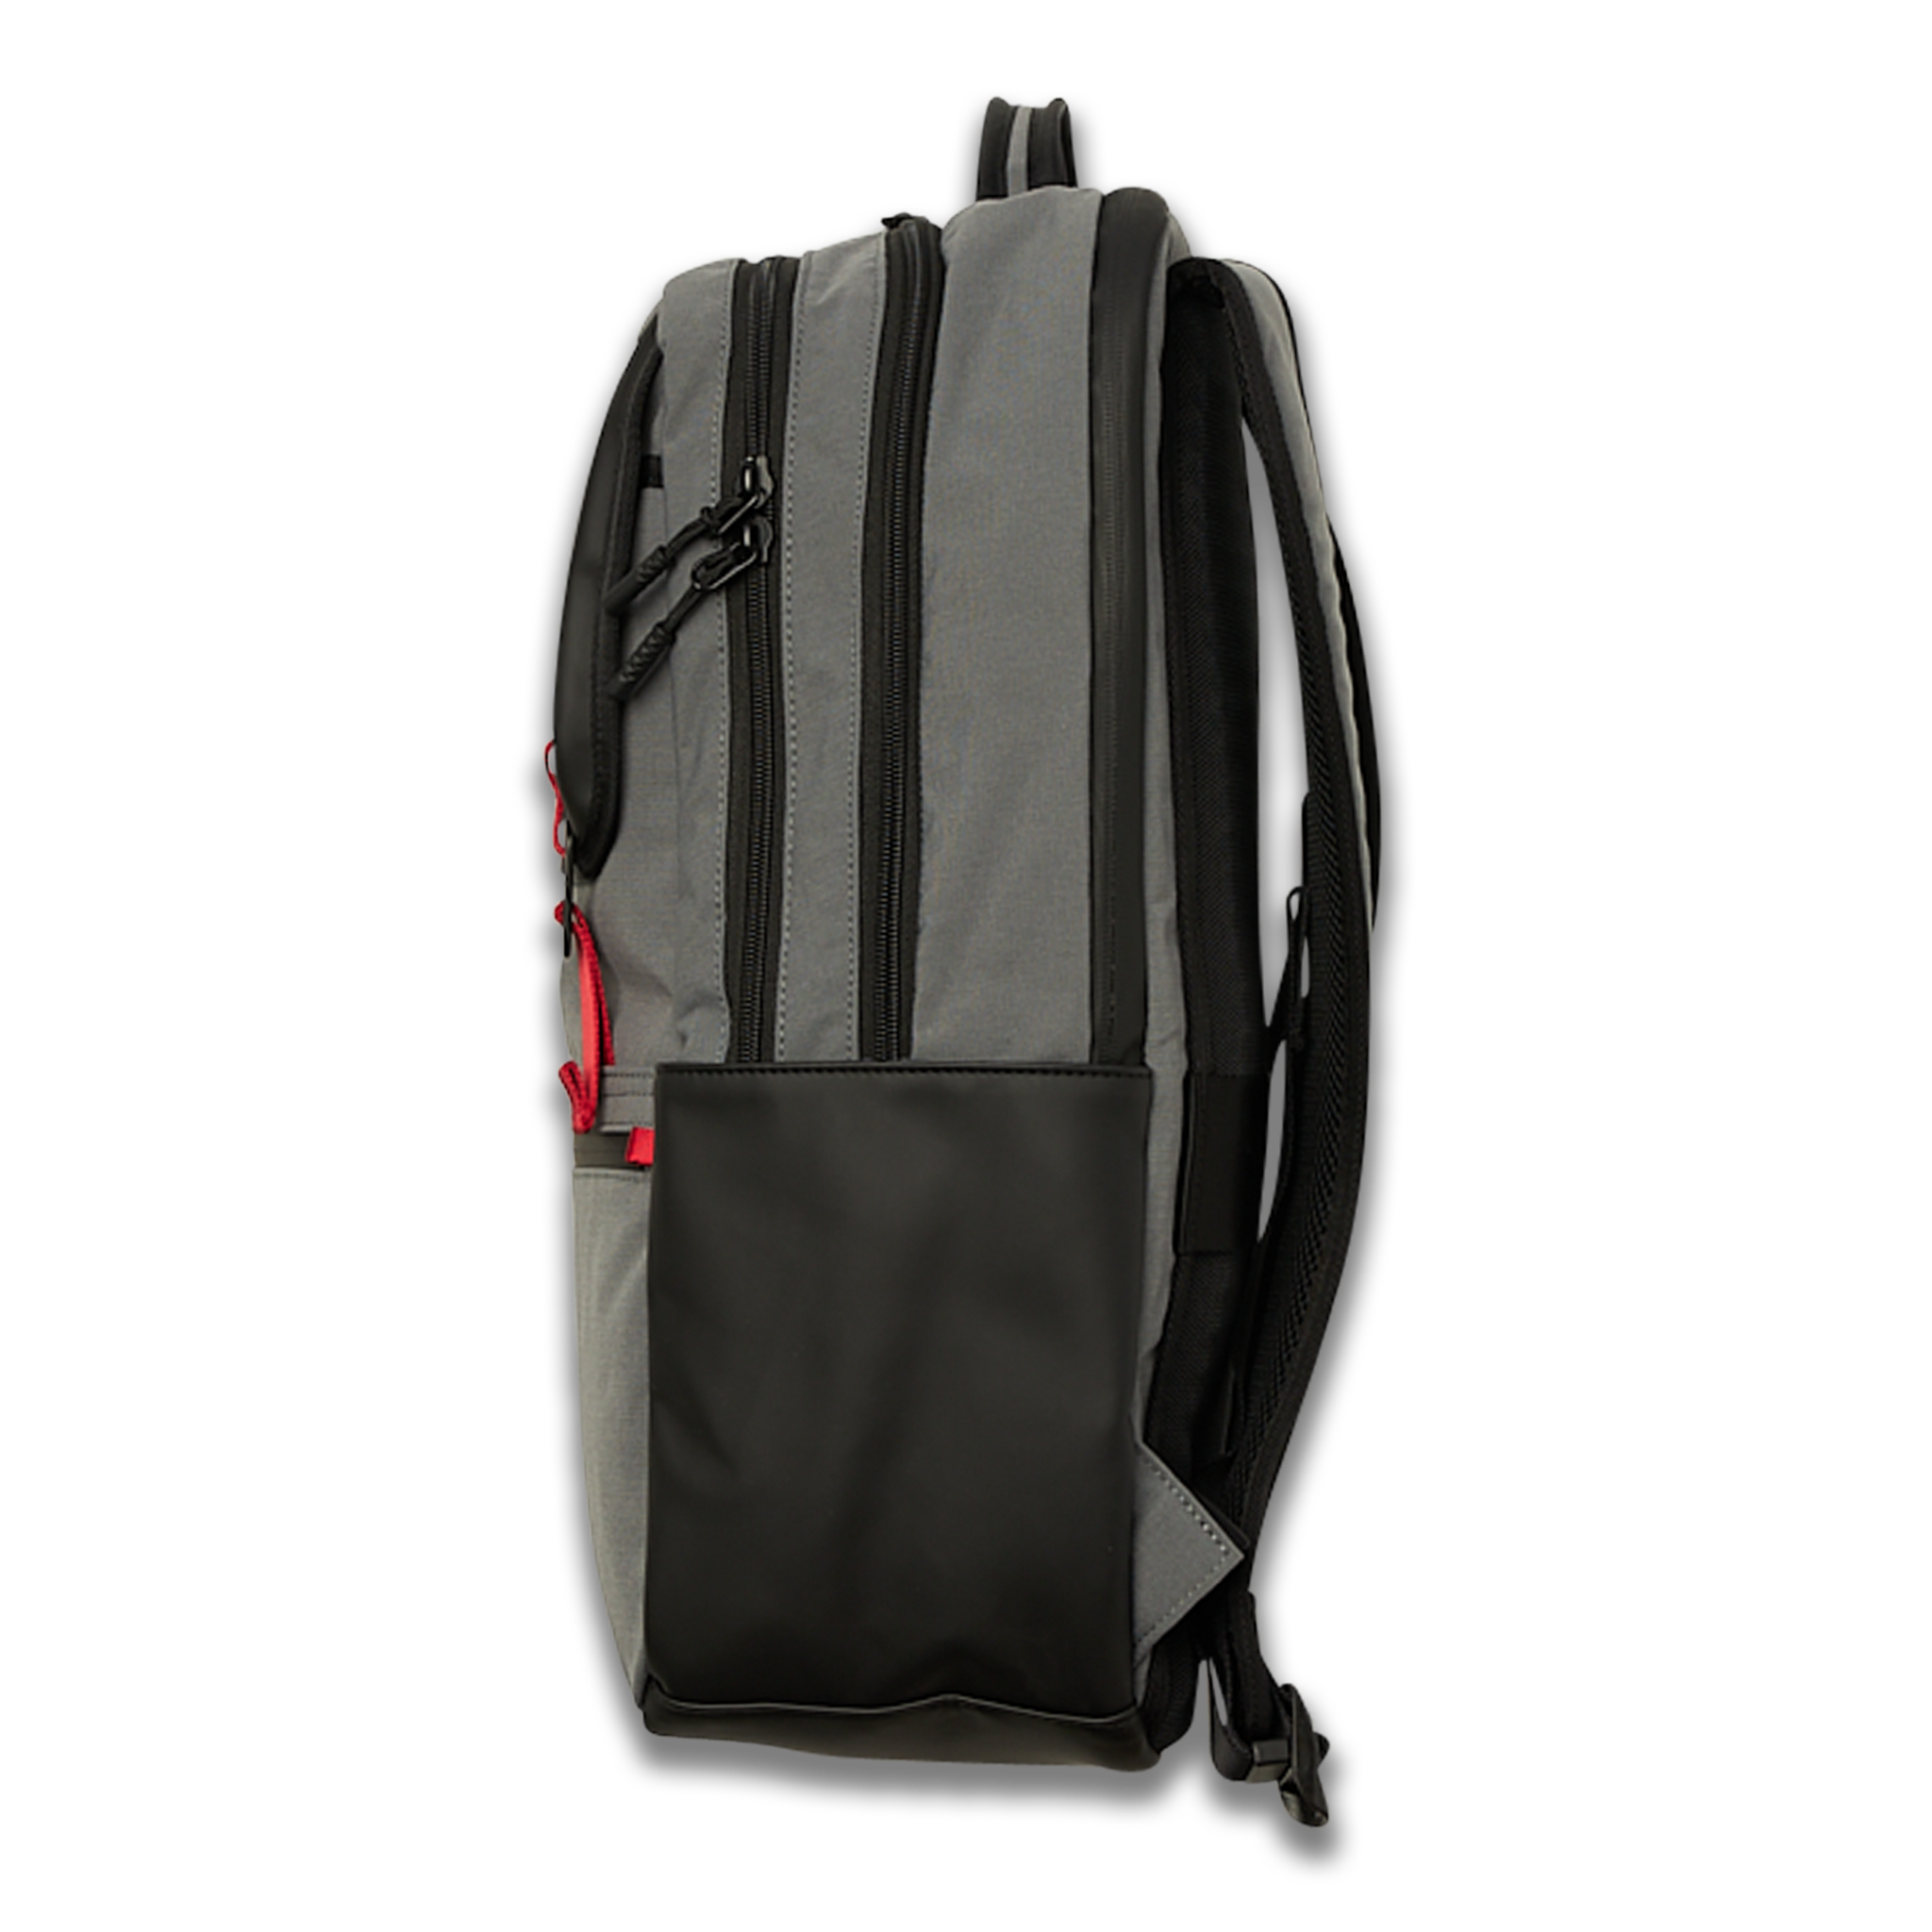 Jones Sports Co. A2 Backpack - Charcoal